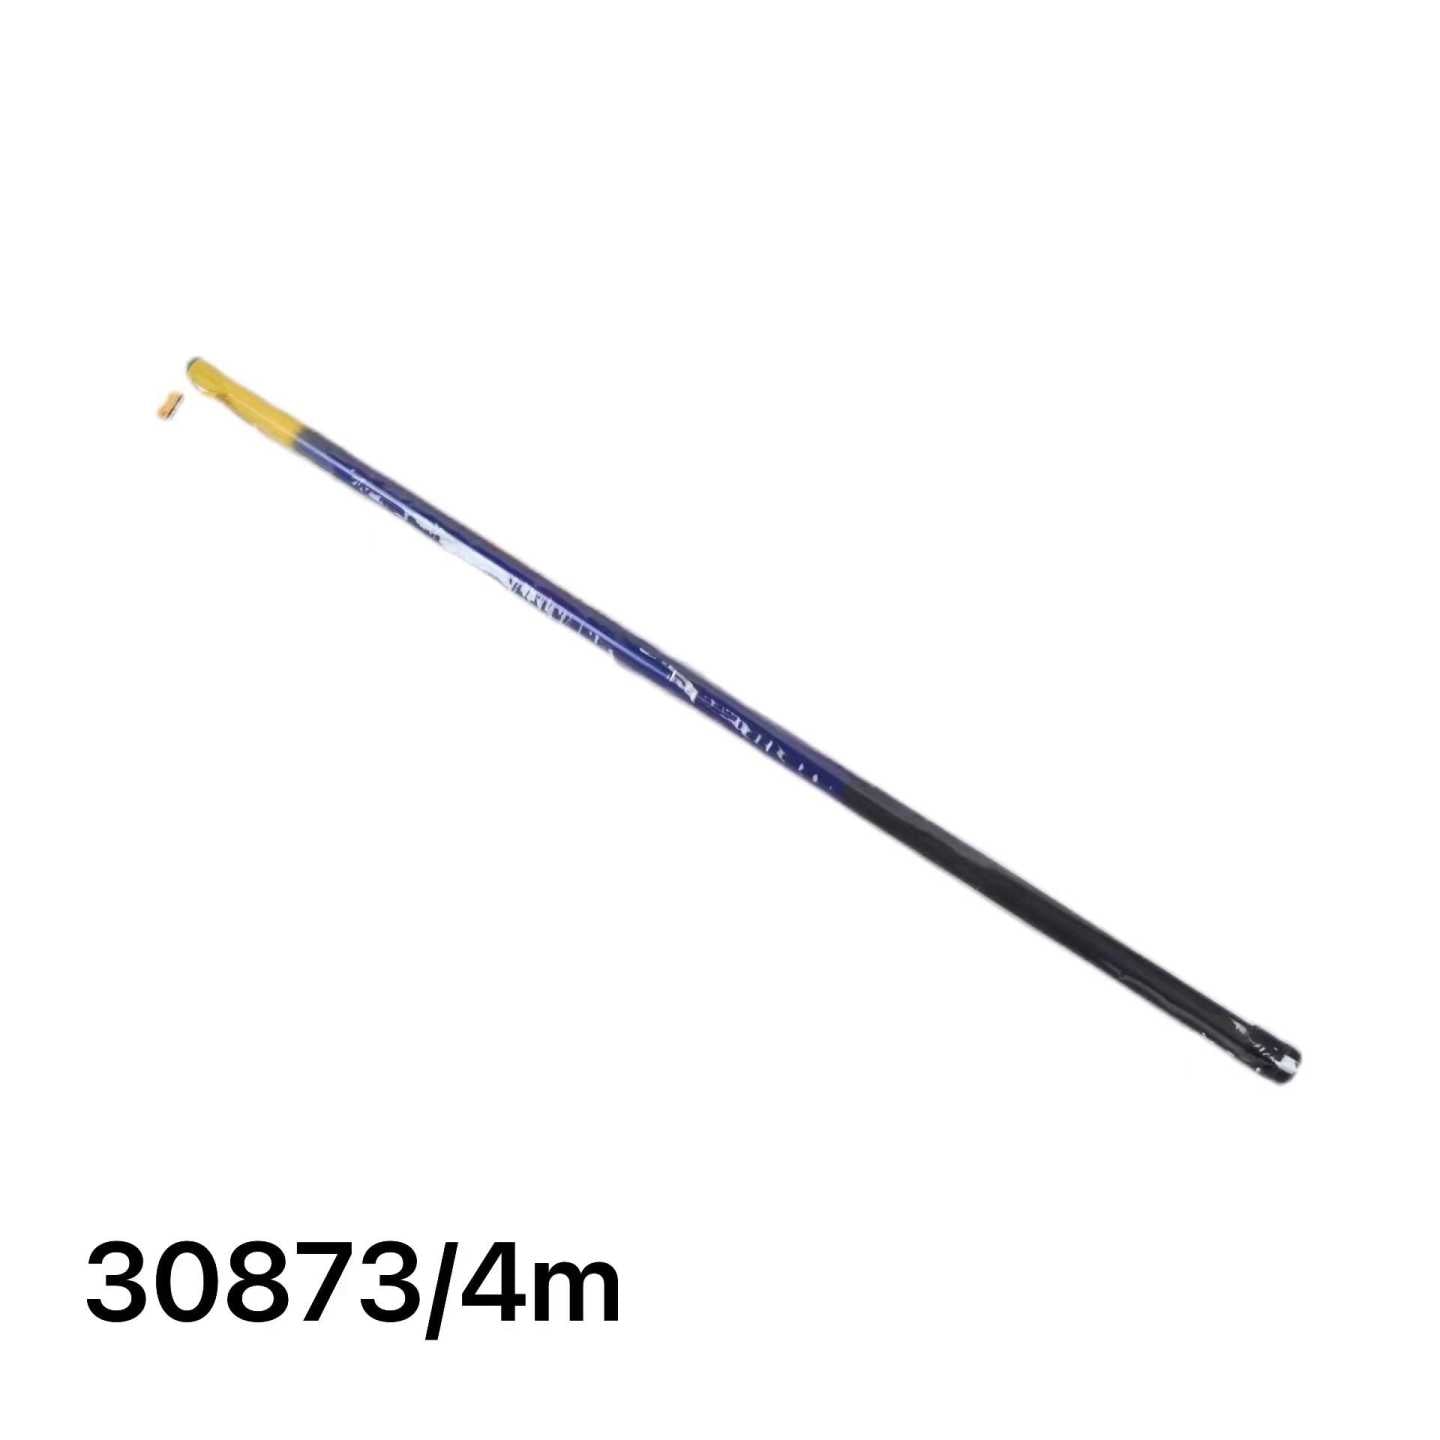 Fishing rod for telescopic pole - 4m - 30873